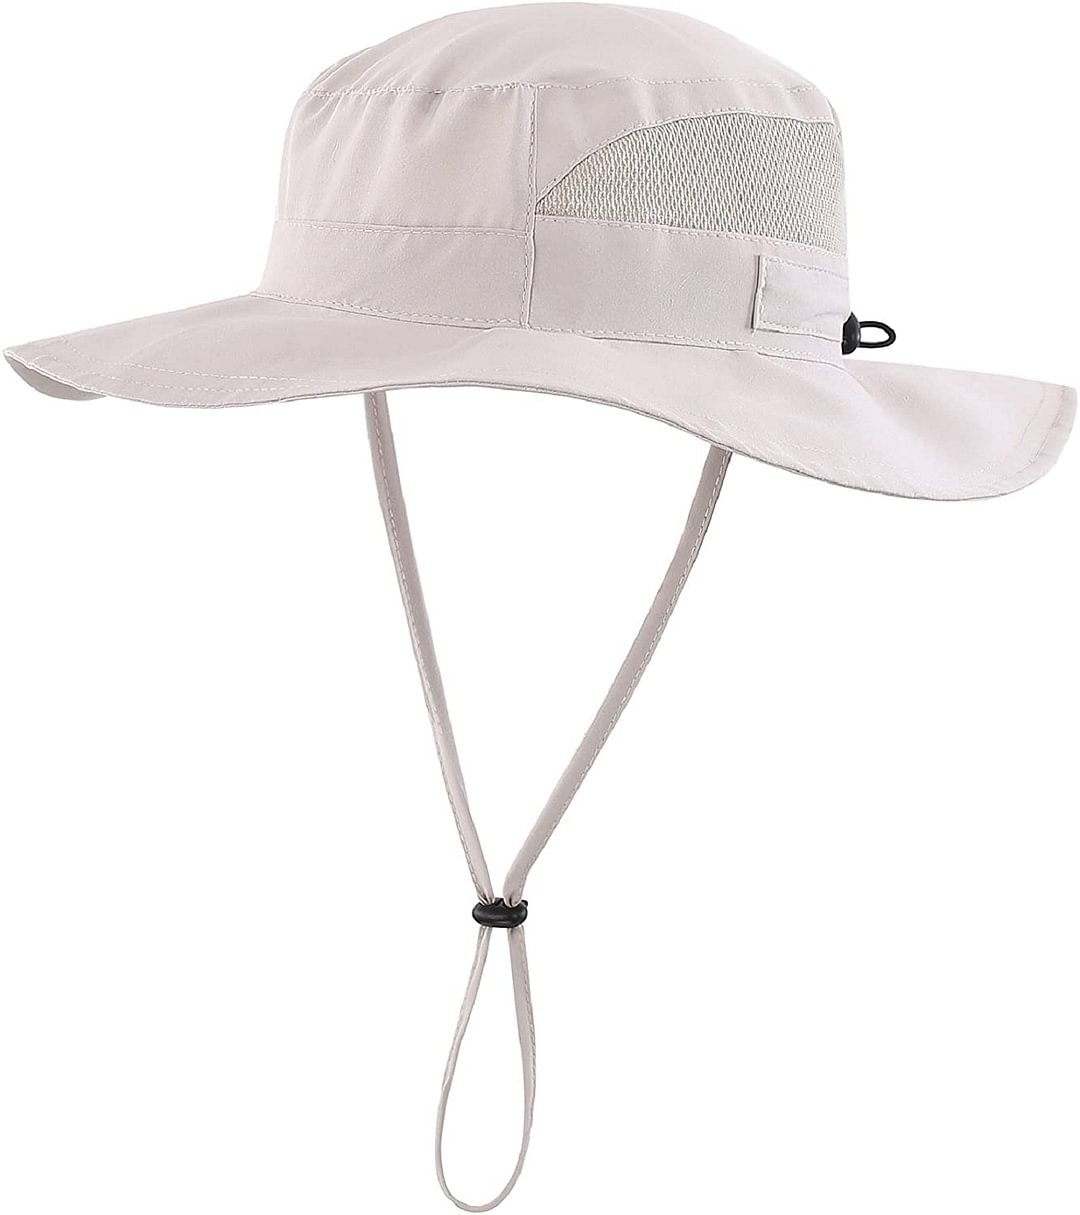 Toddler Kids UPF 50+ Bucket Sun Hat Wide Brim UV Sun Protection Hat